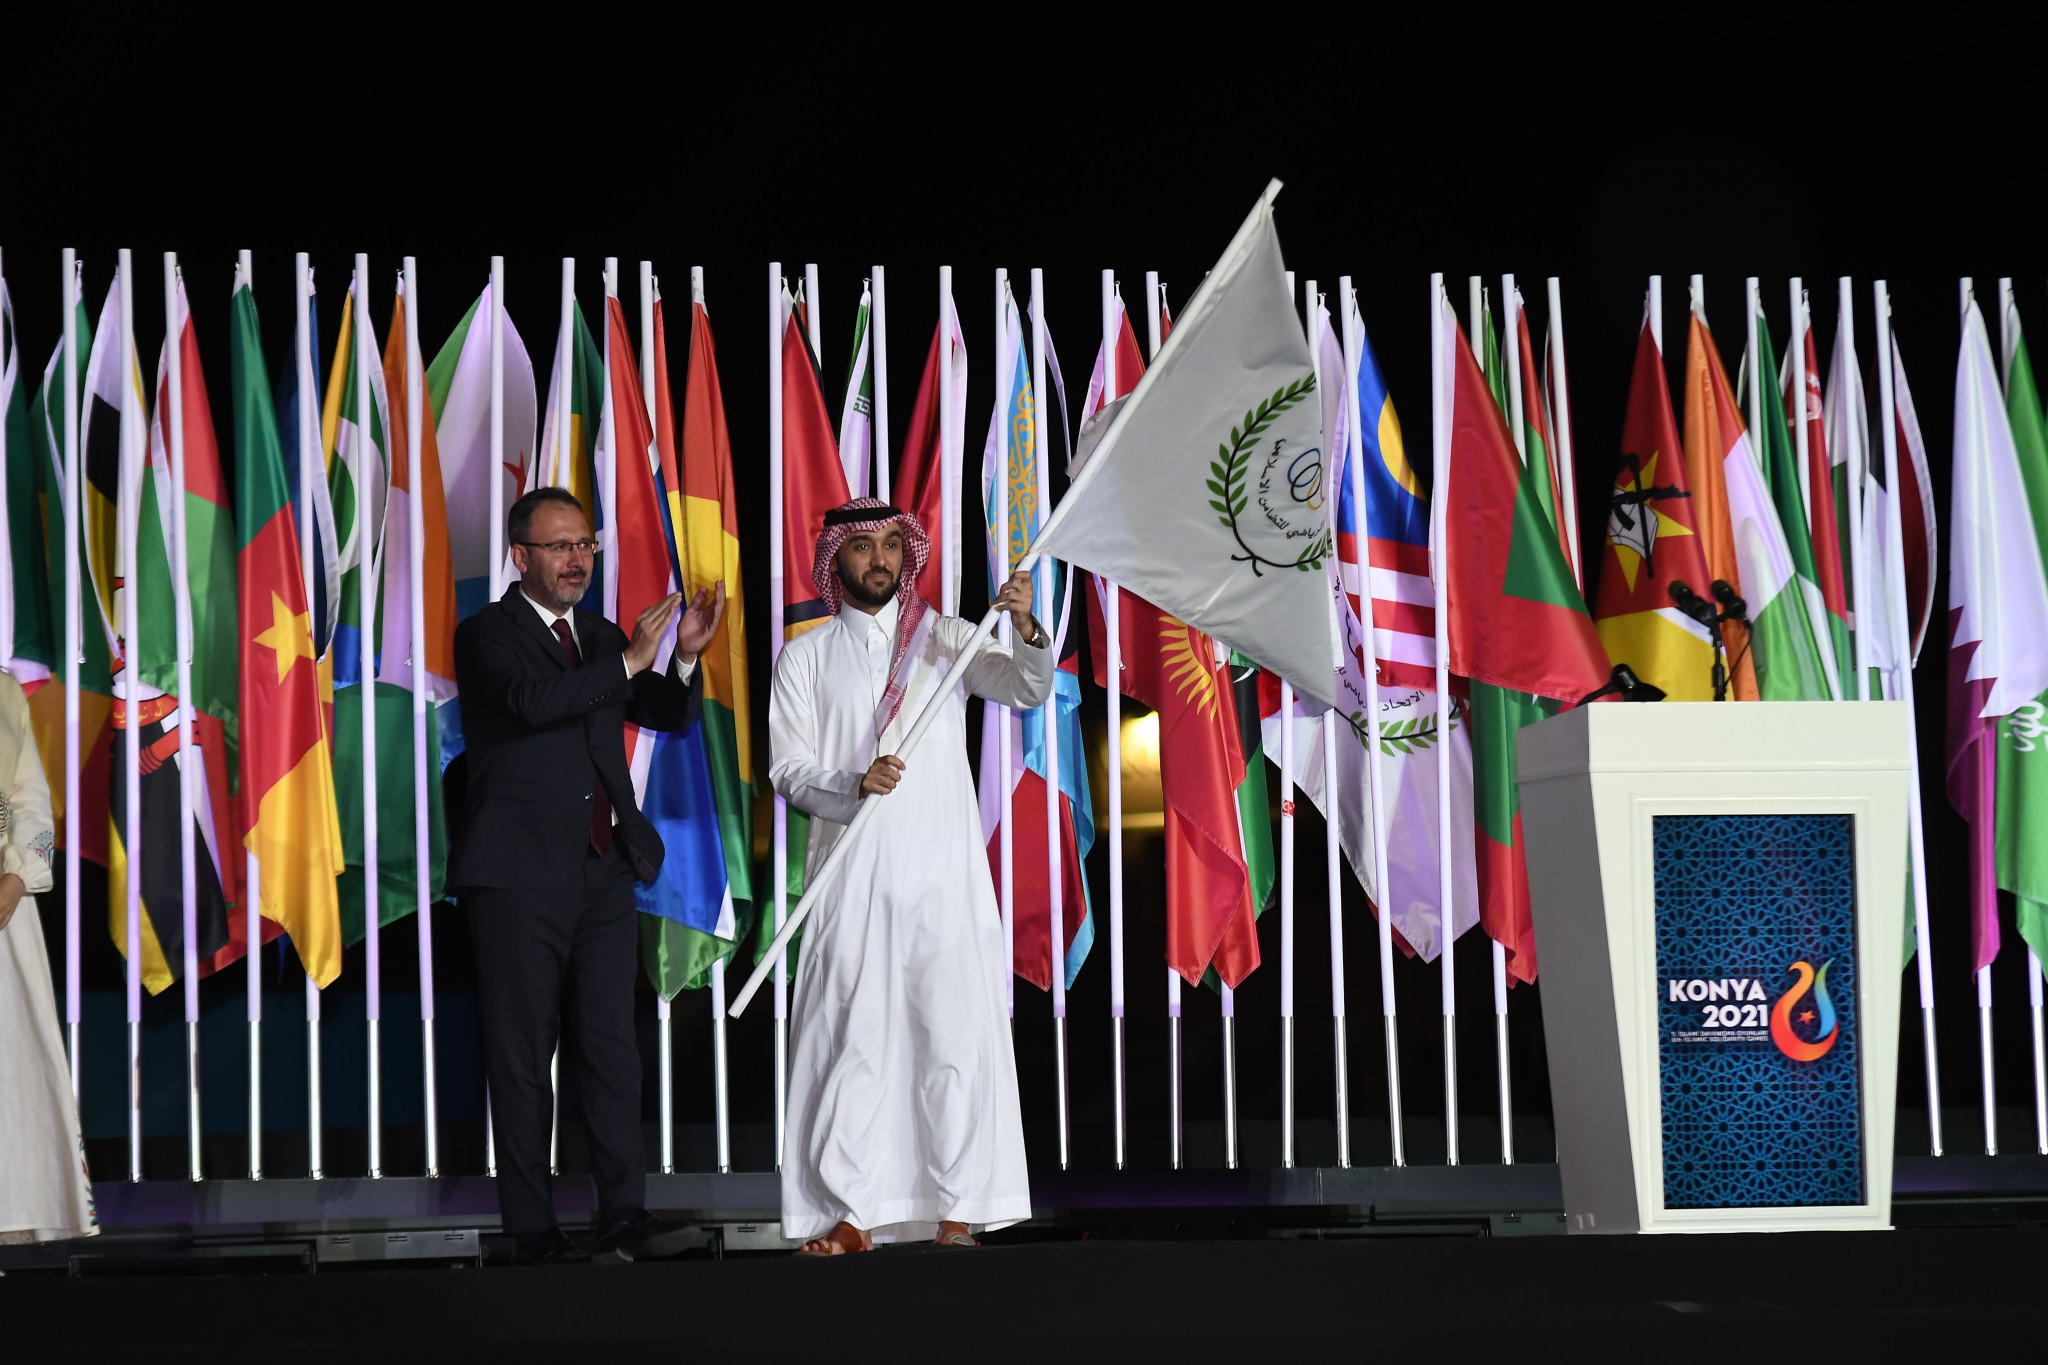 ISSF President Prince Abdulaziz bin Turki Al-Faisal receives the ISSF flag from Turkish Sports Minister Mehmet Kasapoğlu ©Konya 2021